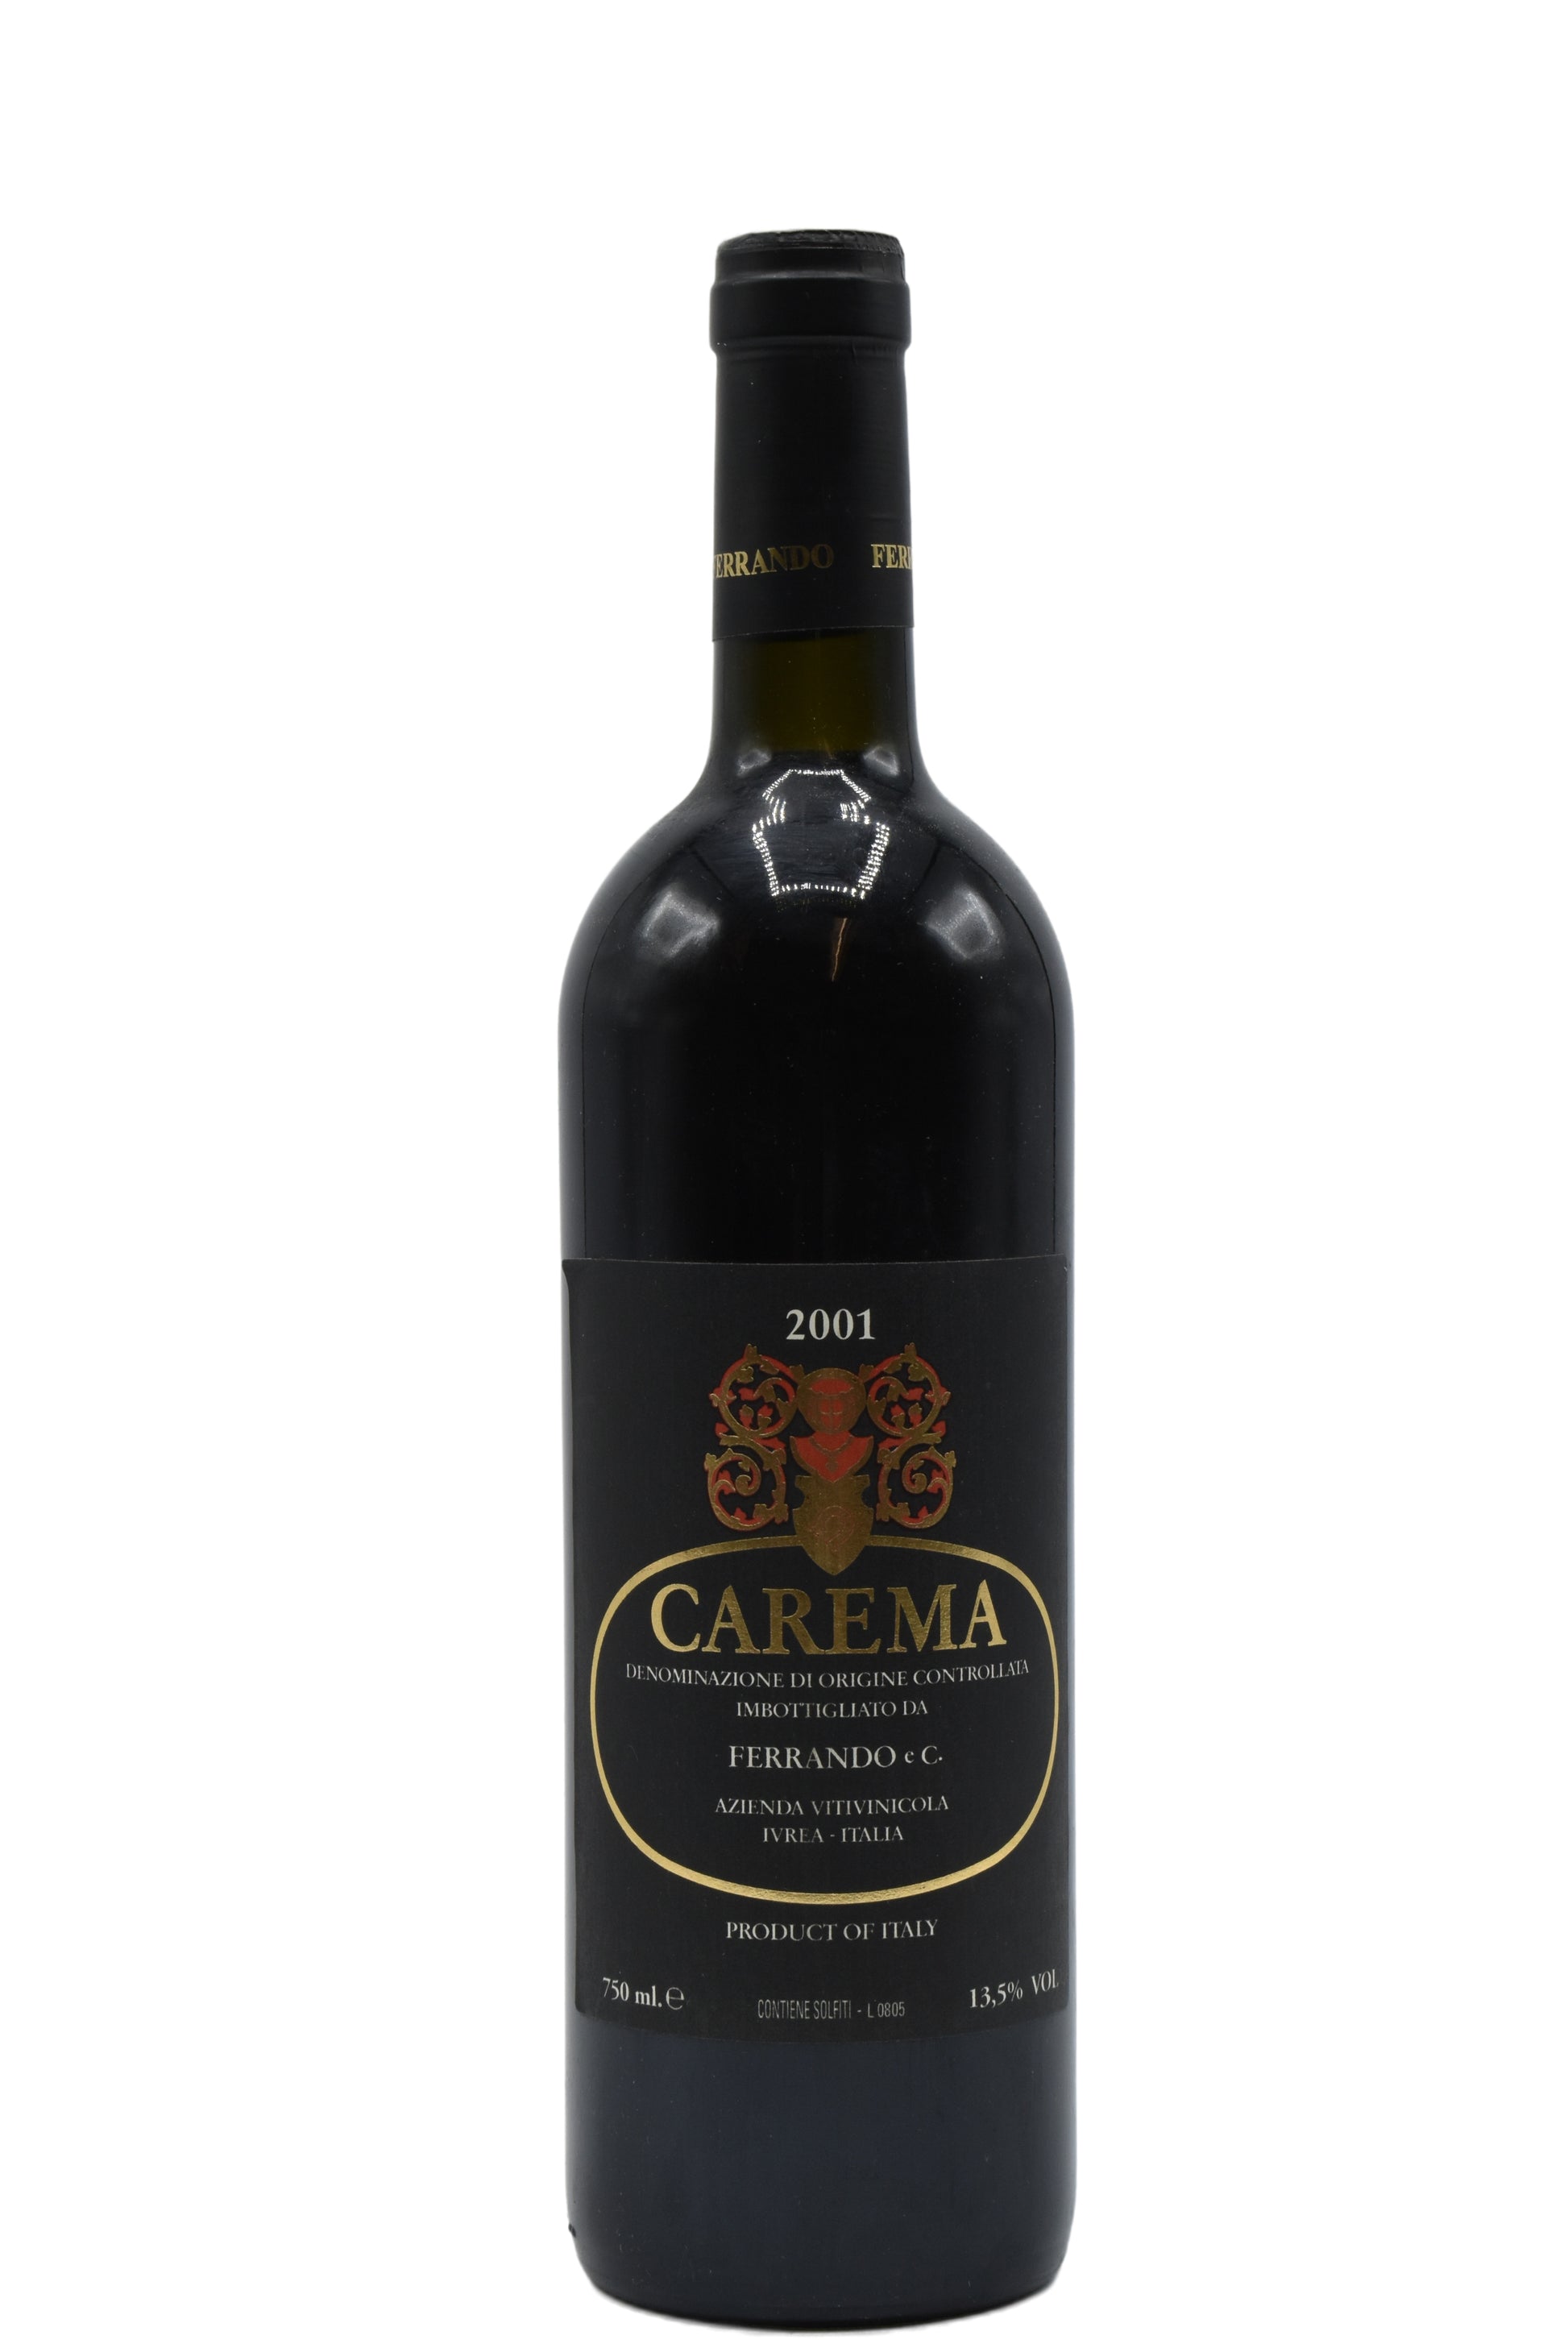 2001 Luigi Ferrando, Carema Black Label Riserva (Etichetta Nera) 750ml - Walker Wine Co.